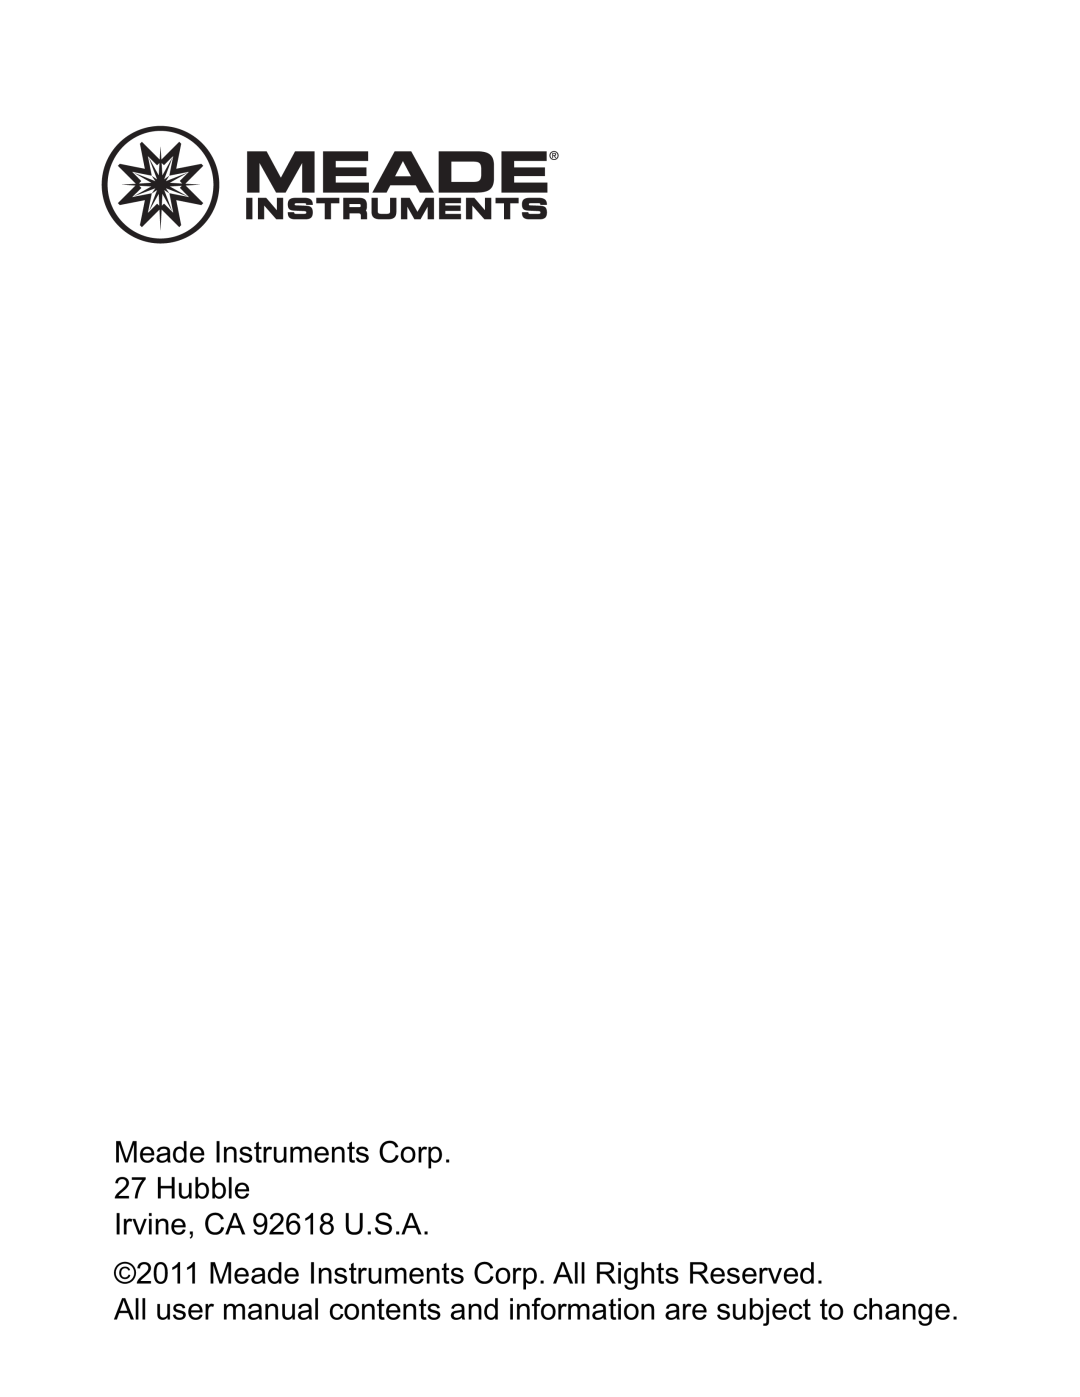 Meade TE827W Meade Instruments Corp 27 Hubble Irvine, CA 92618 U.S.A, Meade Instruments Corp. All Rights Reserved 